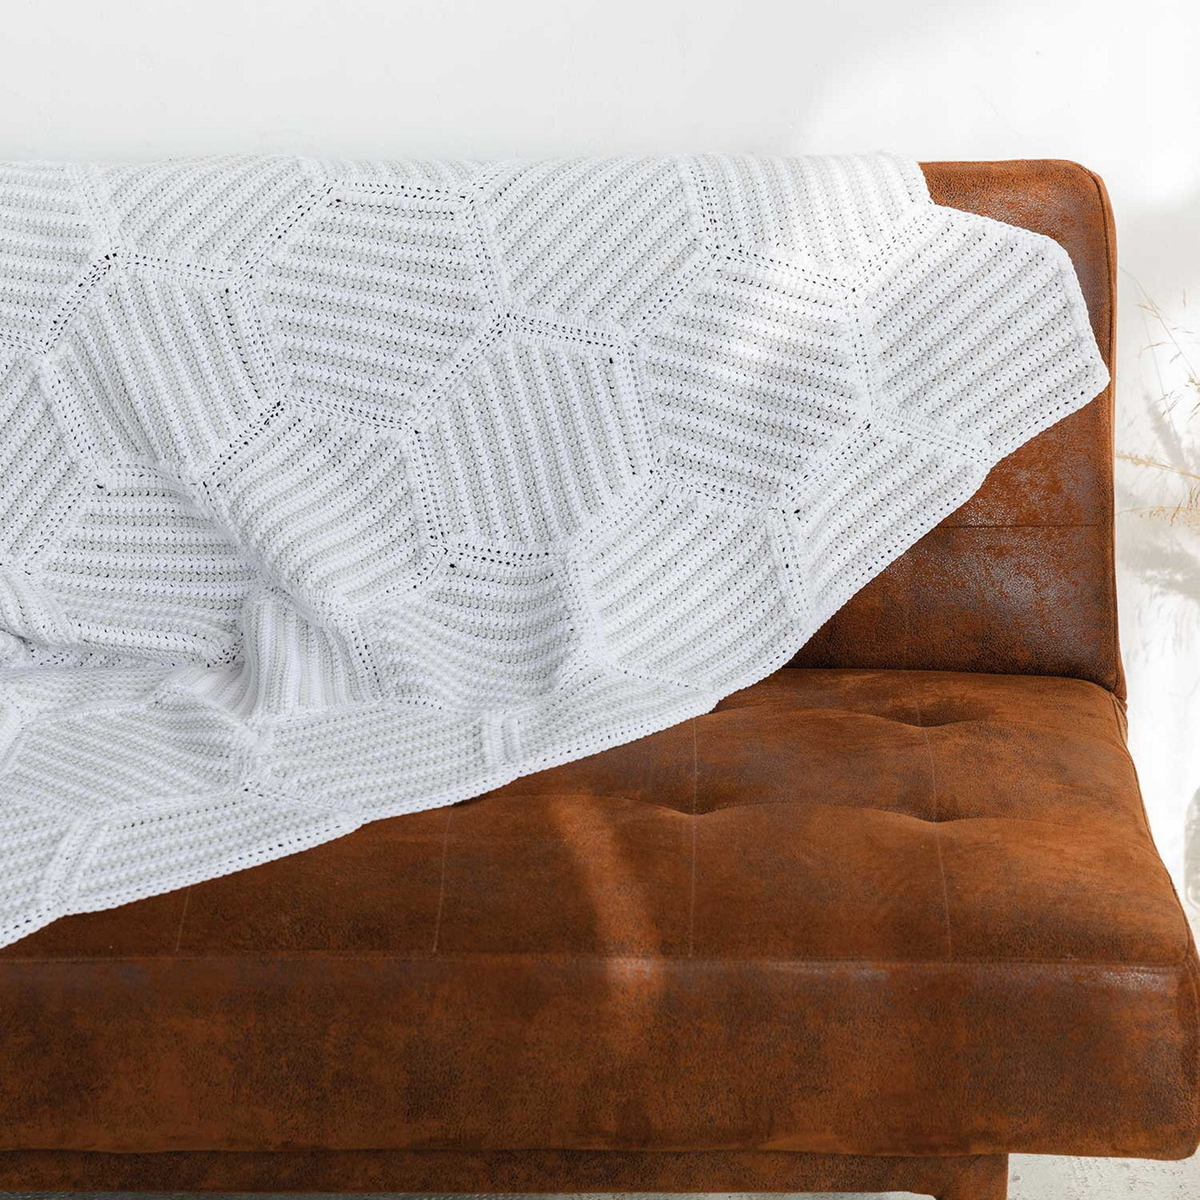 Crochet a blanket with a hexagonal pattern